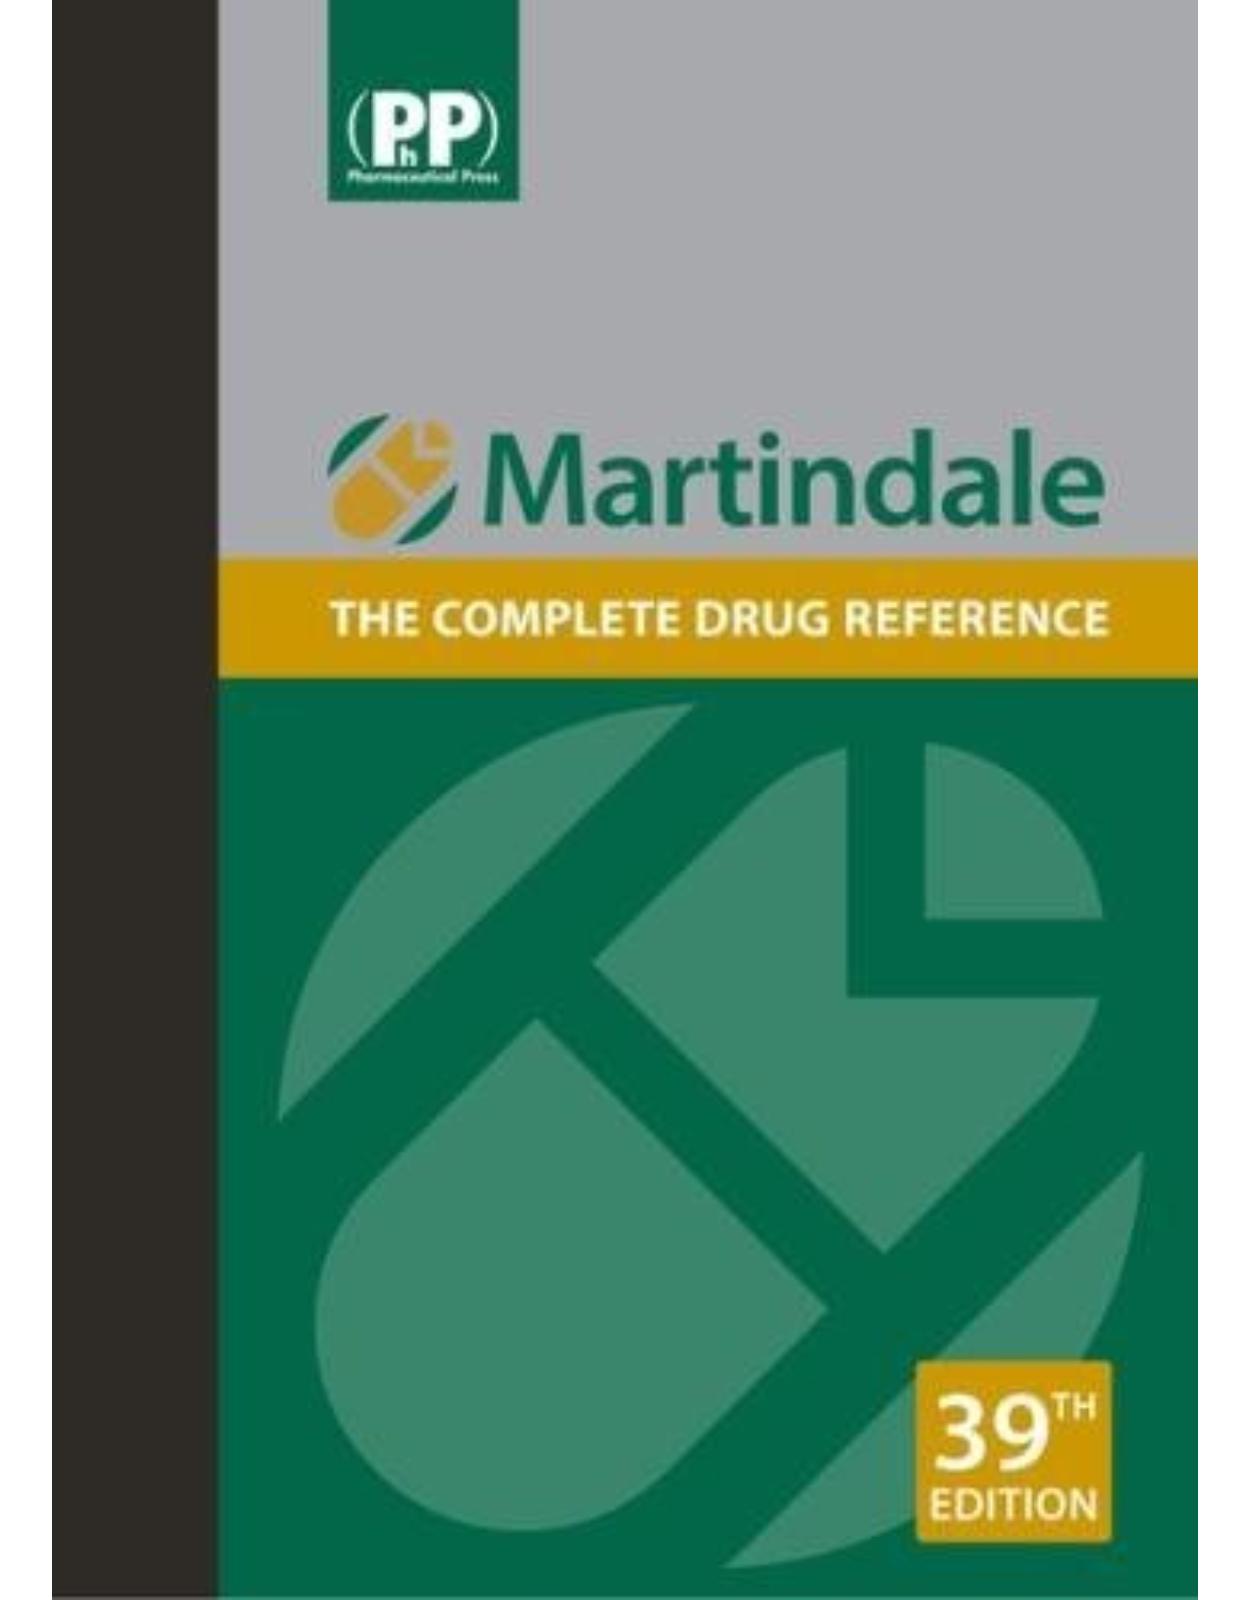 Martindale: The complete drug reference